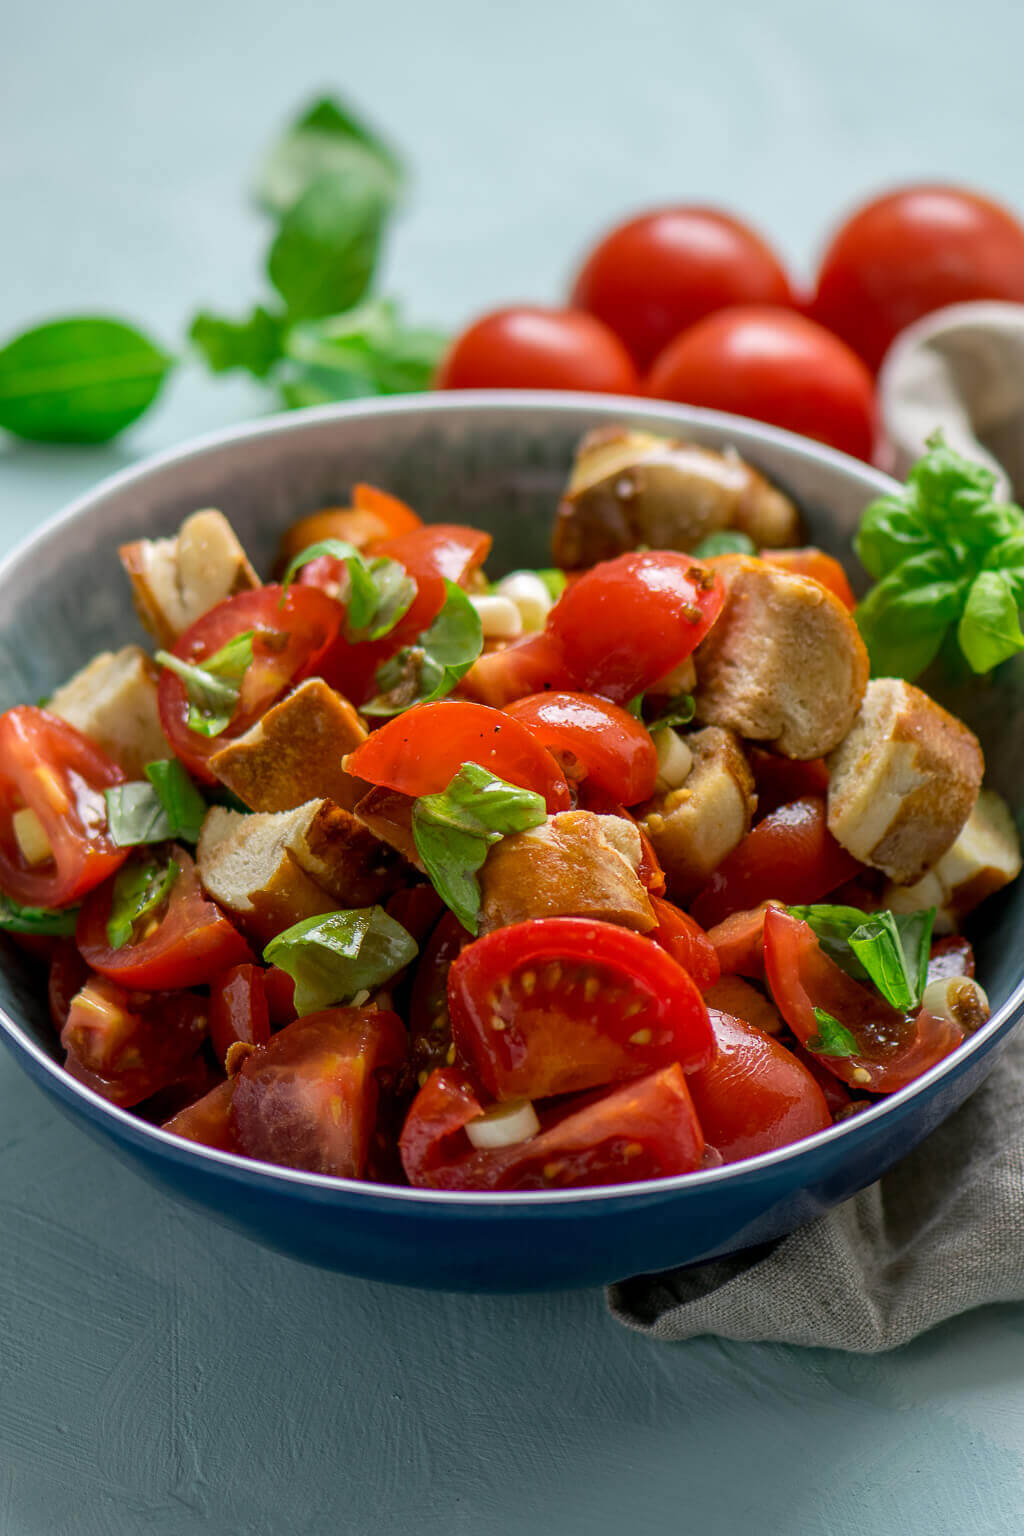 Mega leckerer Laugenbrezel Tomatensalat - in nur 15 Minuten zubereitet